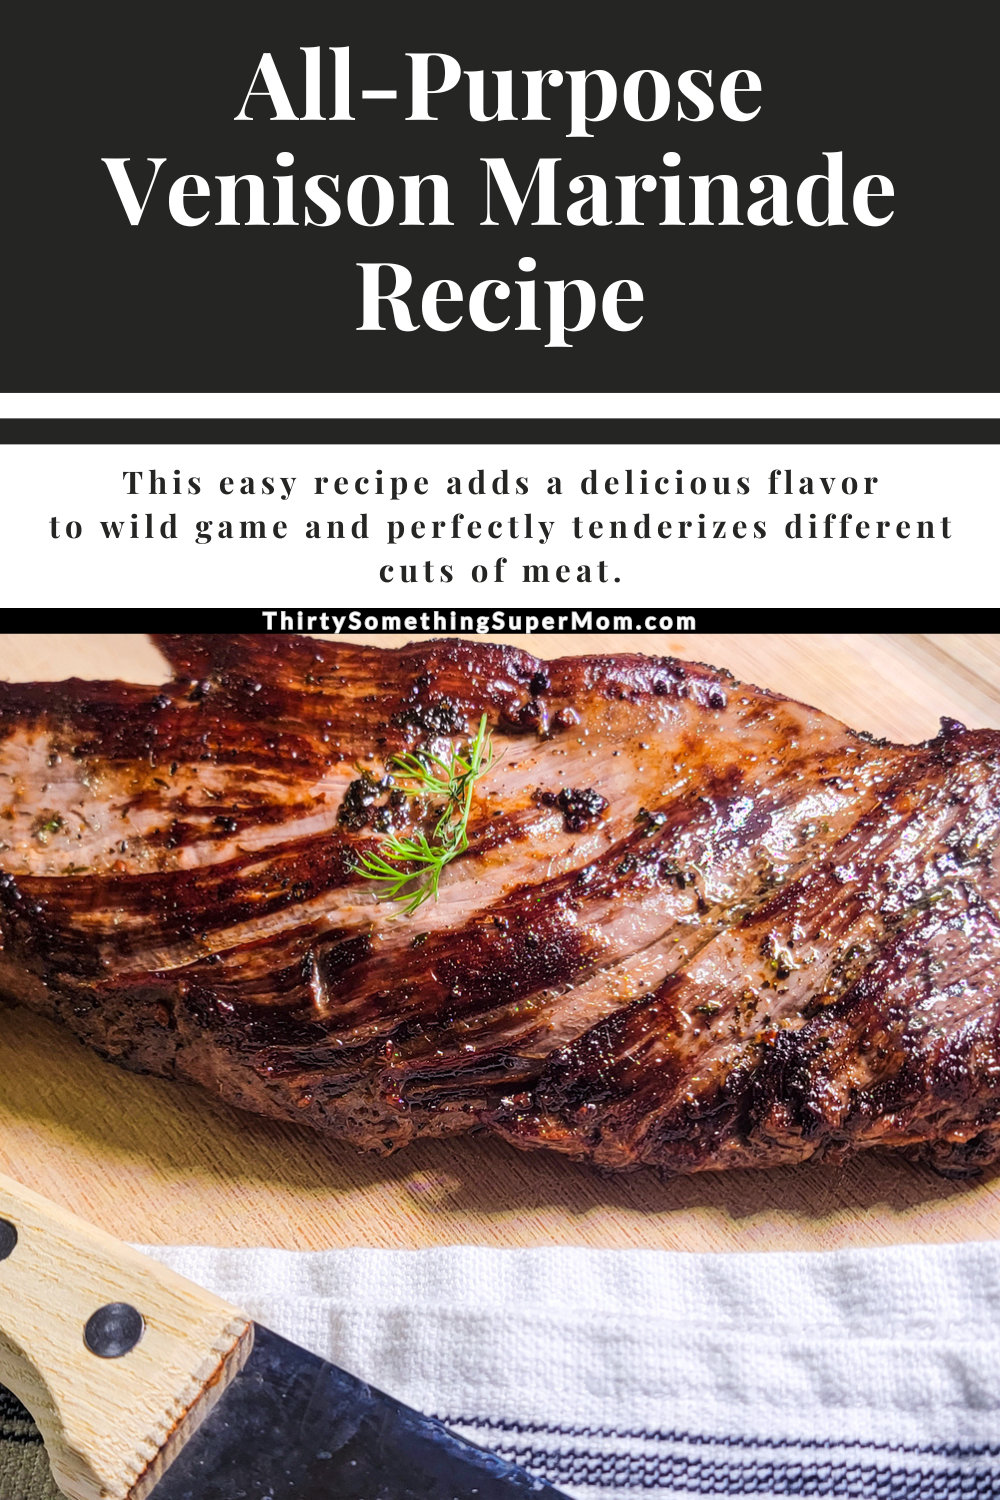 steak soaked in all-purpose venison marinade recipe 